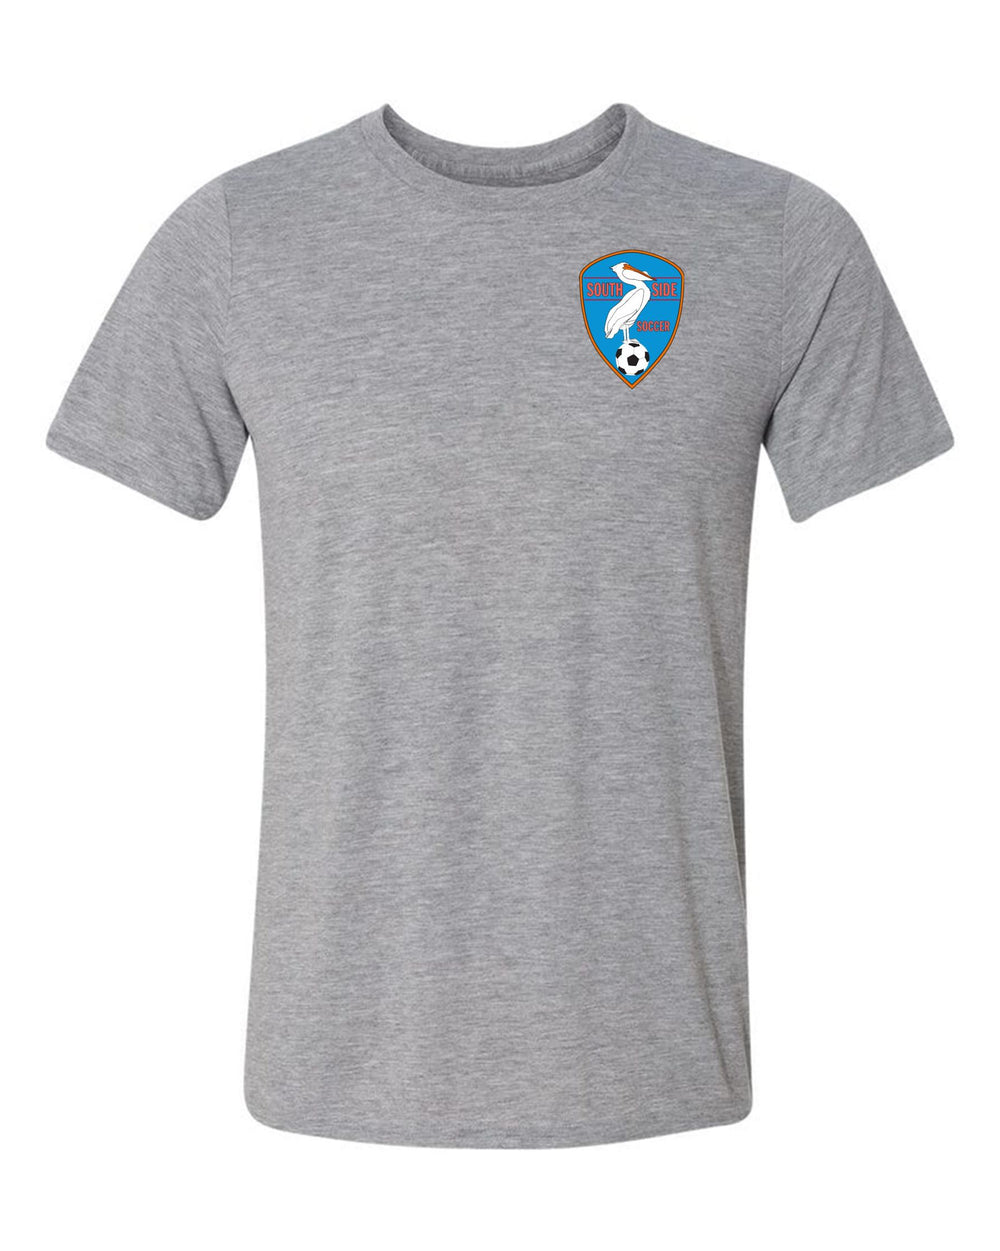 Southside Youth Soccer Short Sleeve T-Shirt SYS Spiritwear ORANGE WOMENS 2XLARGE - Third Coast Soccer